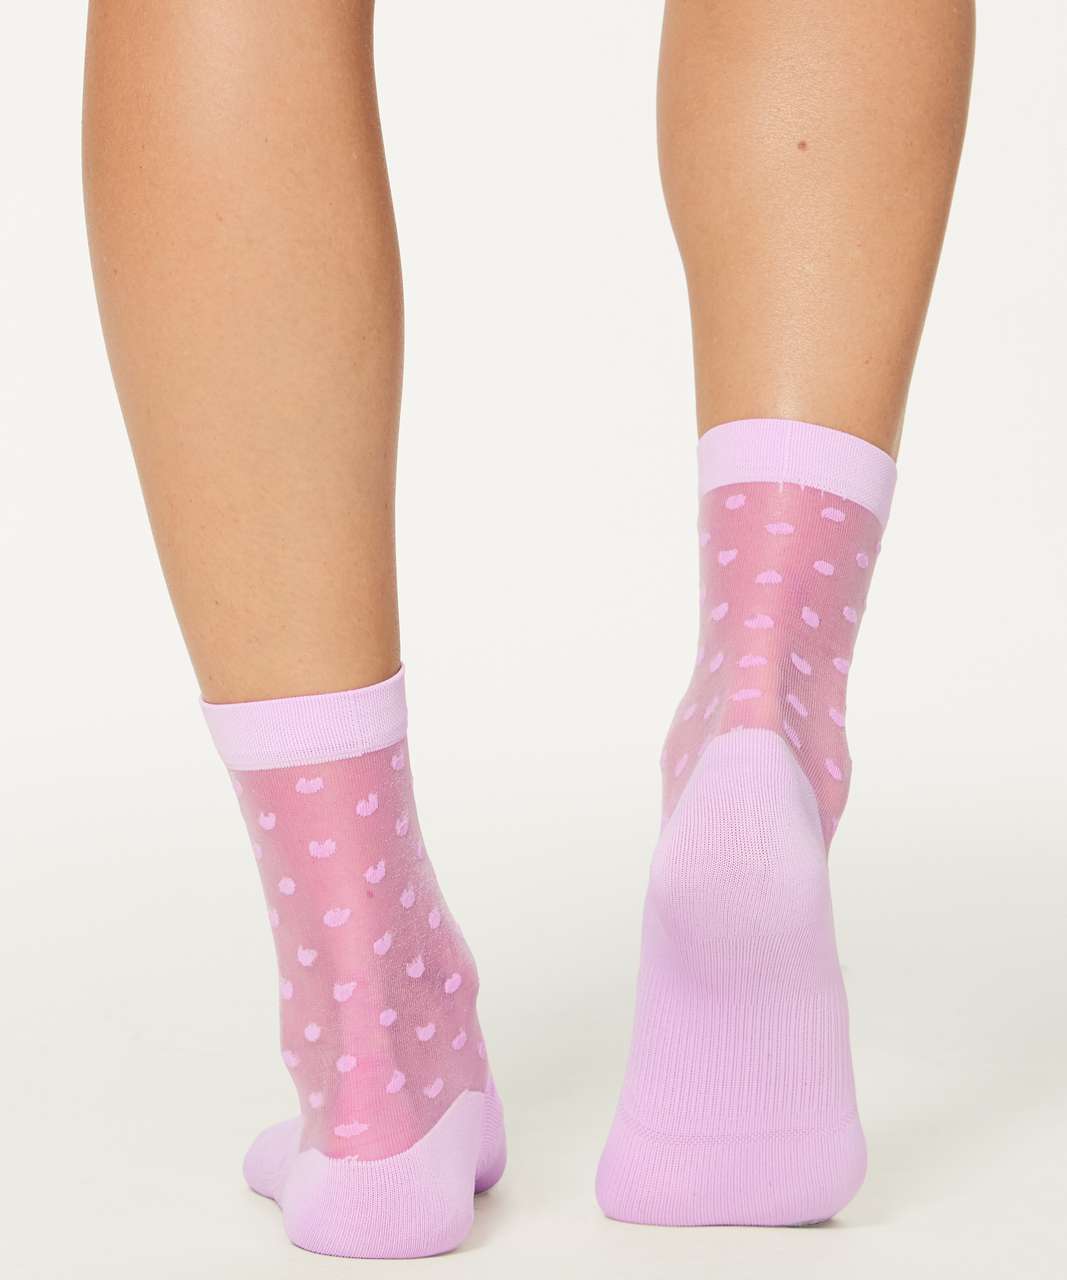 Lululemon Light On Your Toes Sock - Cherry Blossom Pink